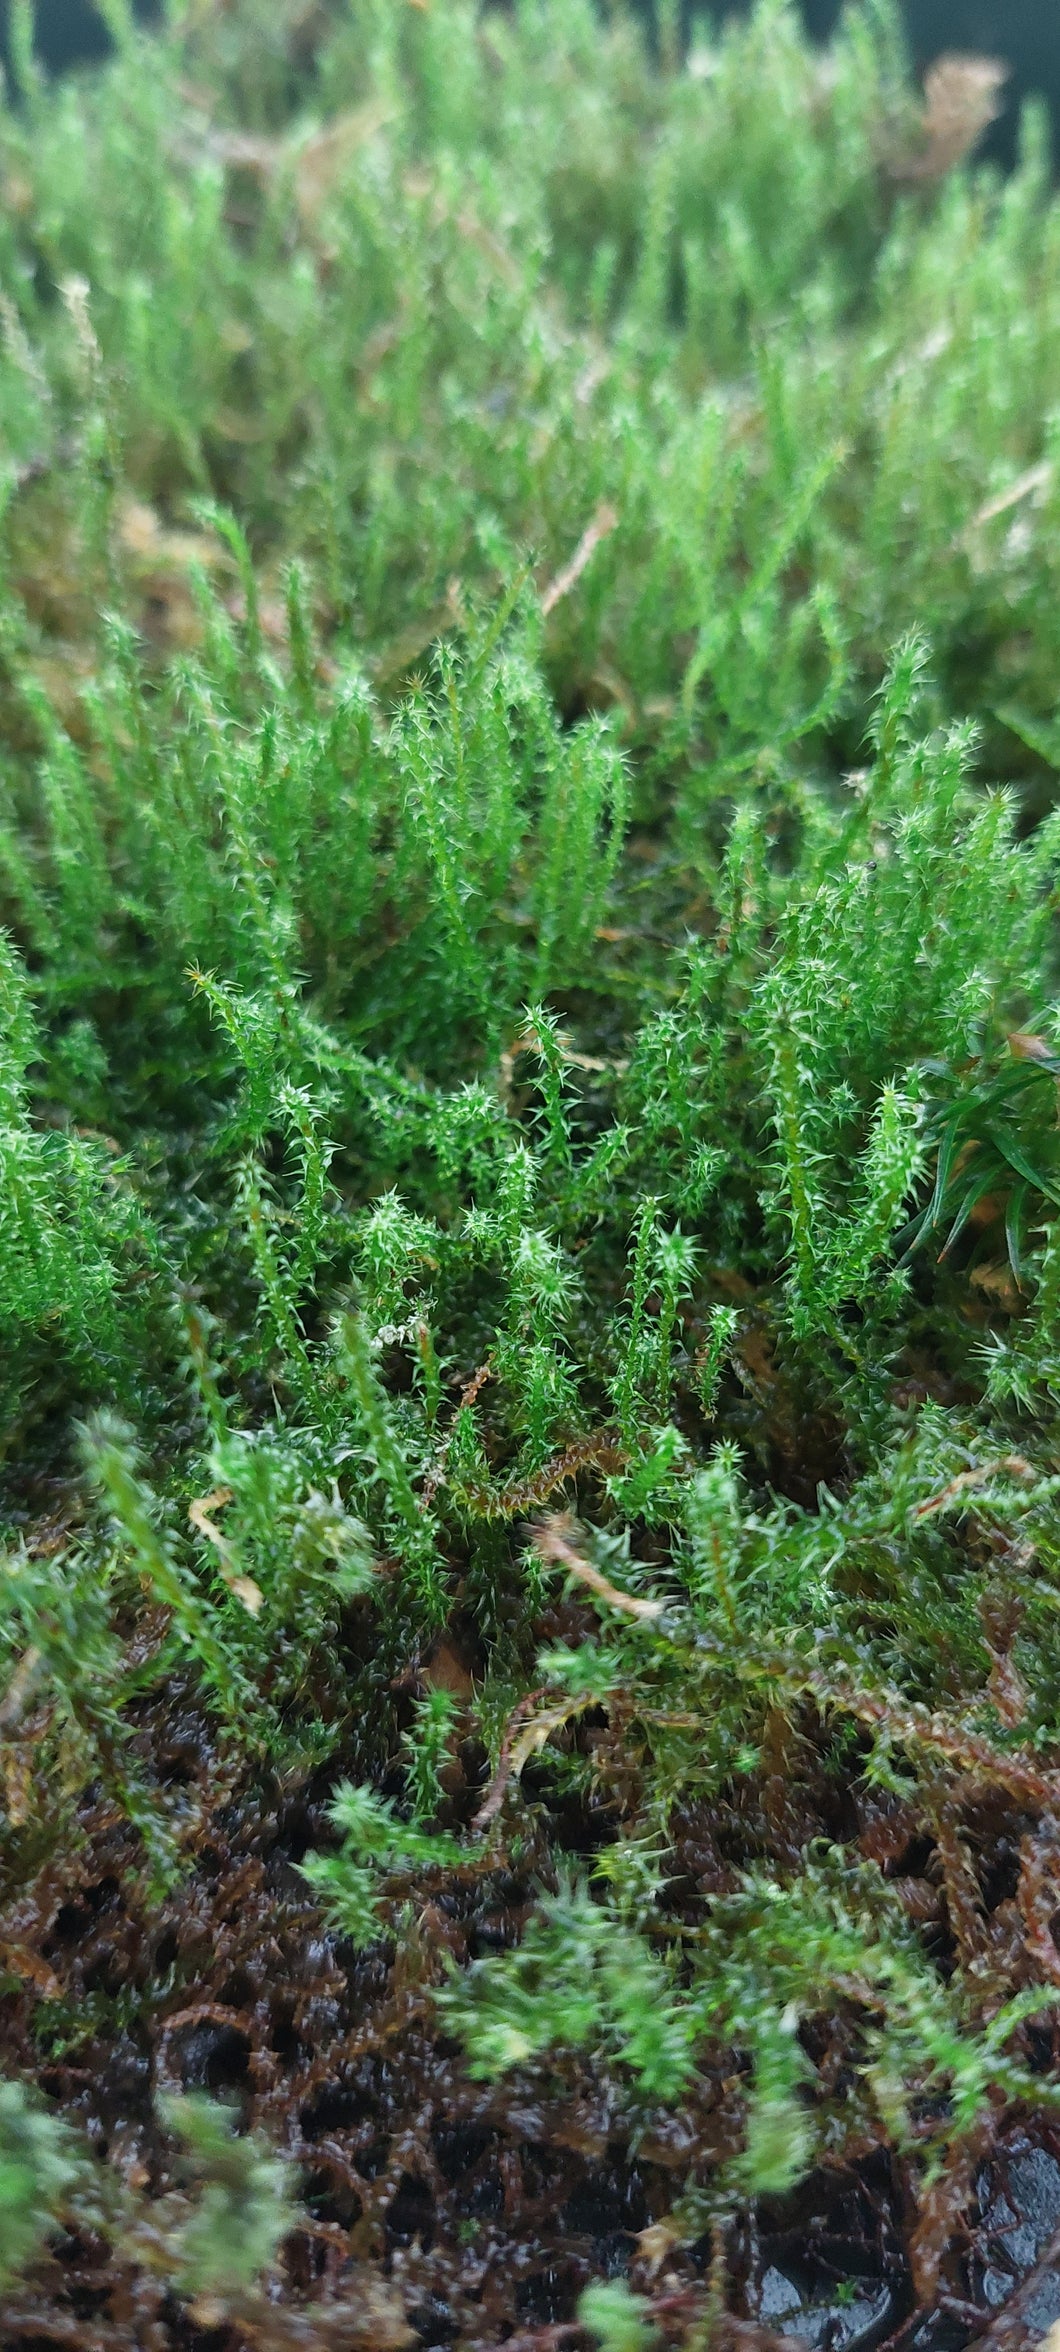 Springy Turf Moss (Rhytidiadelphus squarrosus )